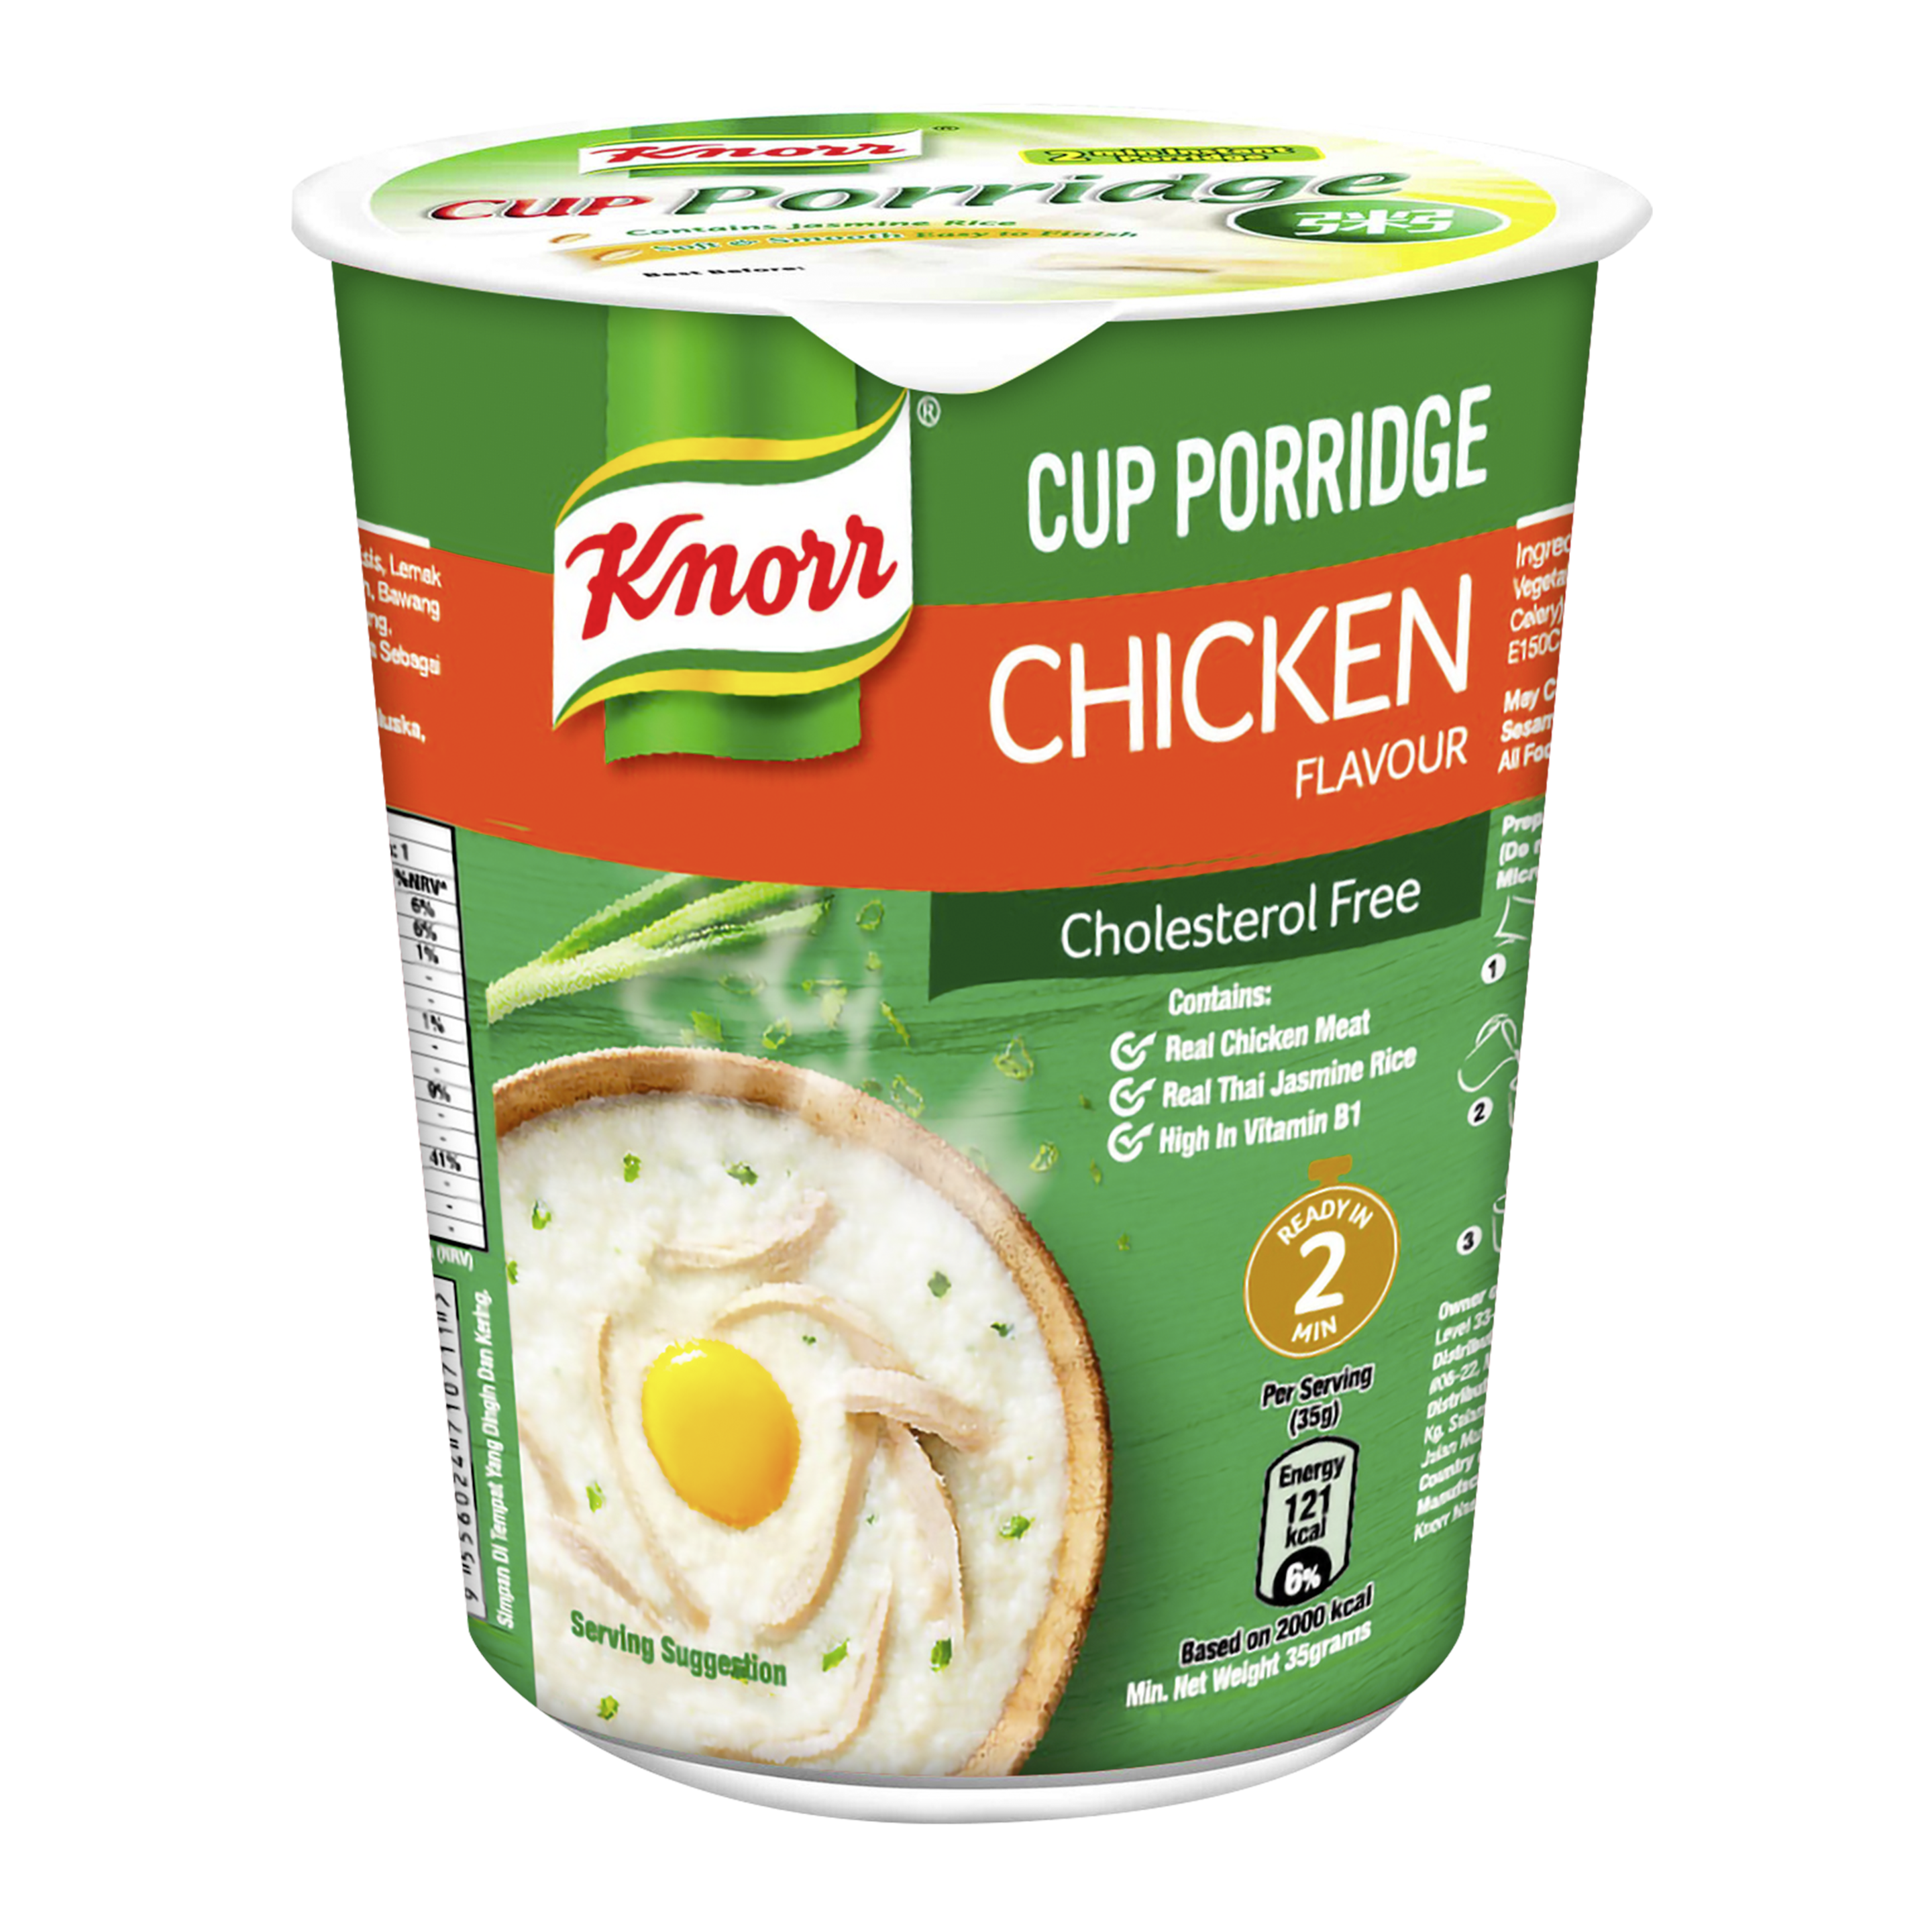 Knorr Chicken Porridge